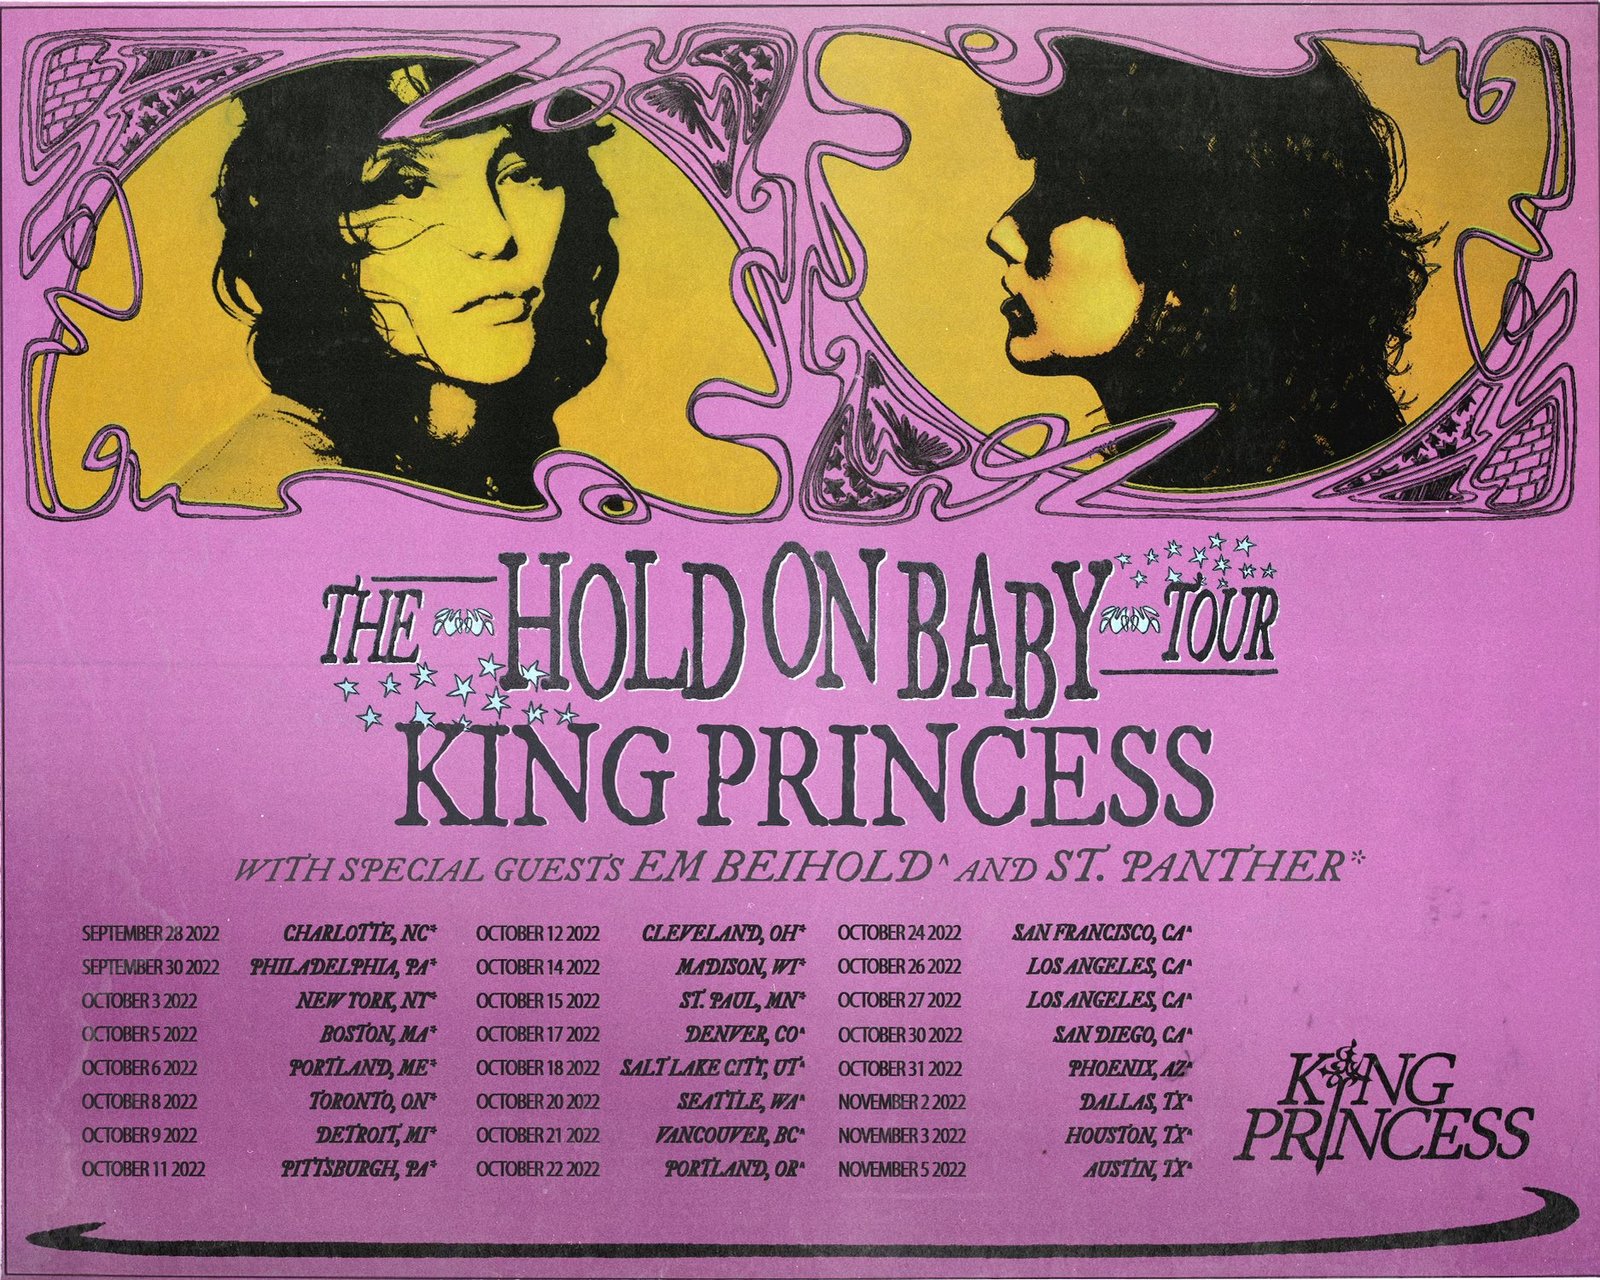 hold on baby tour king princess